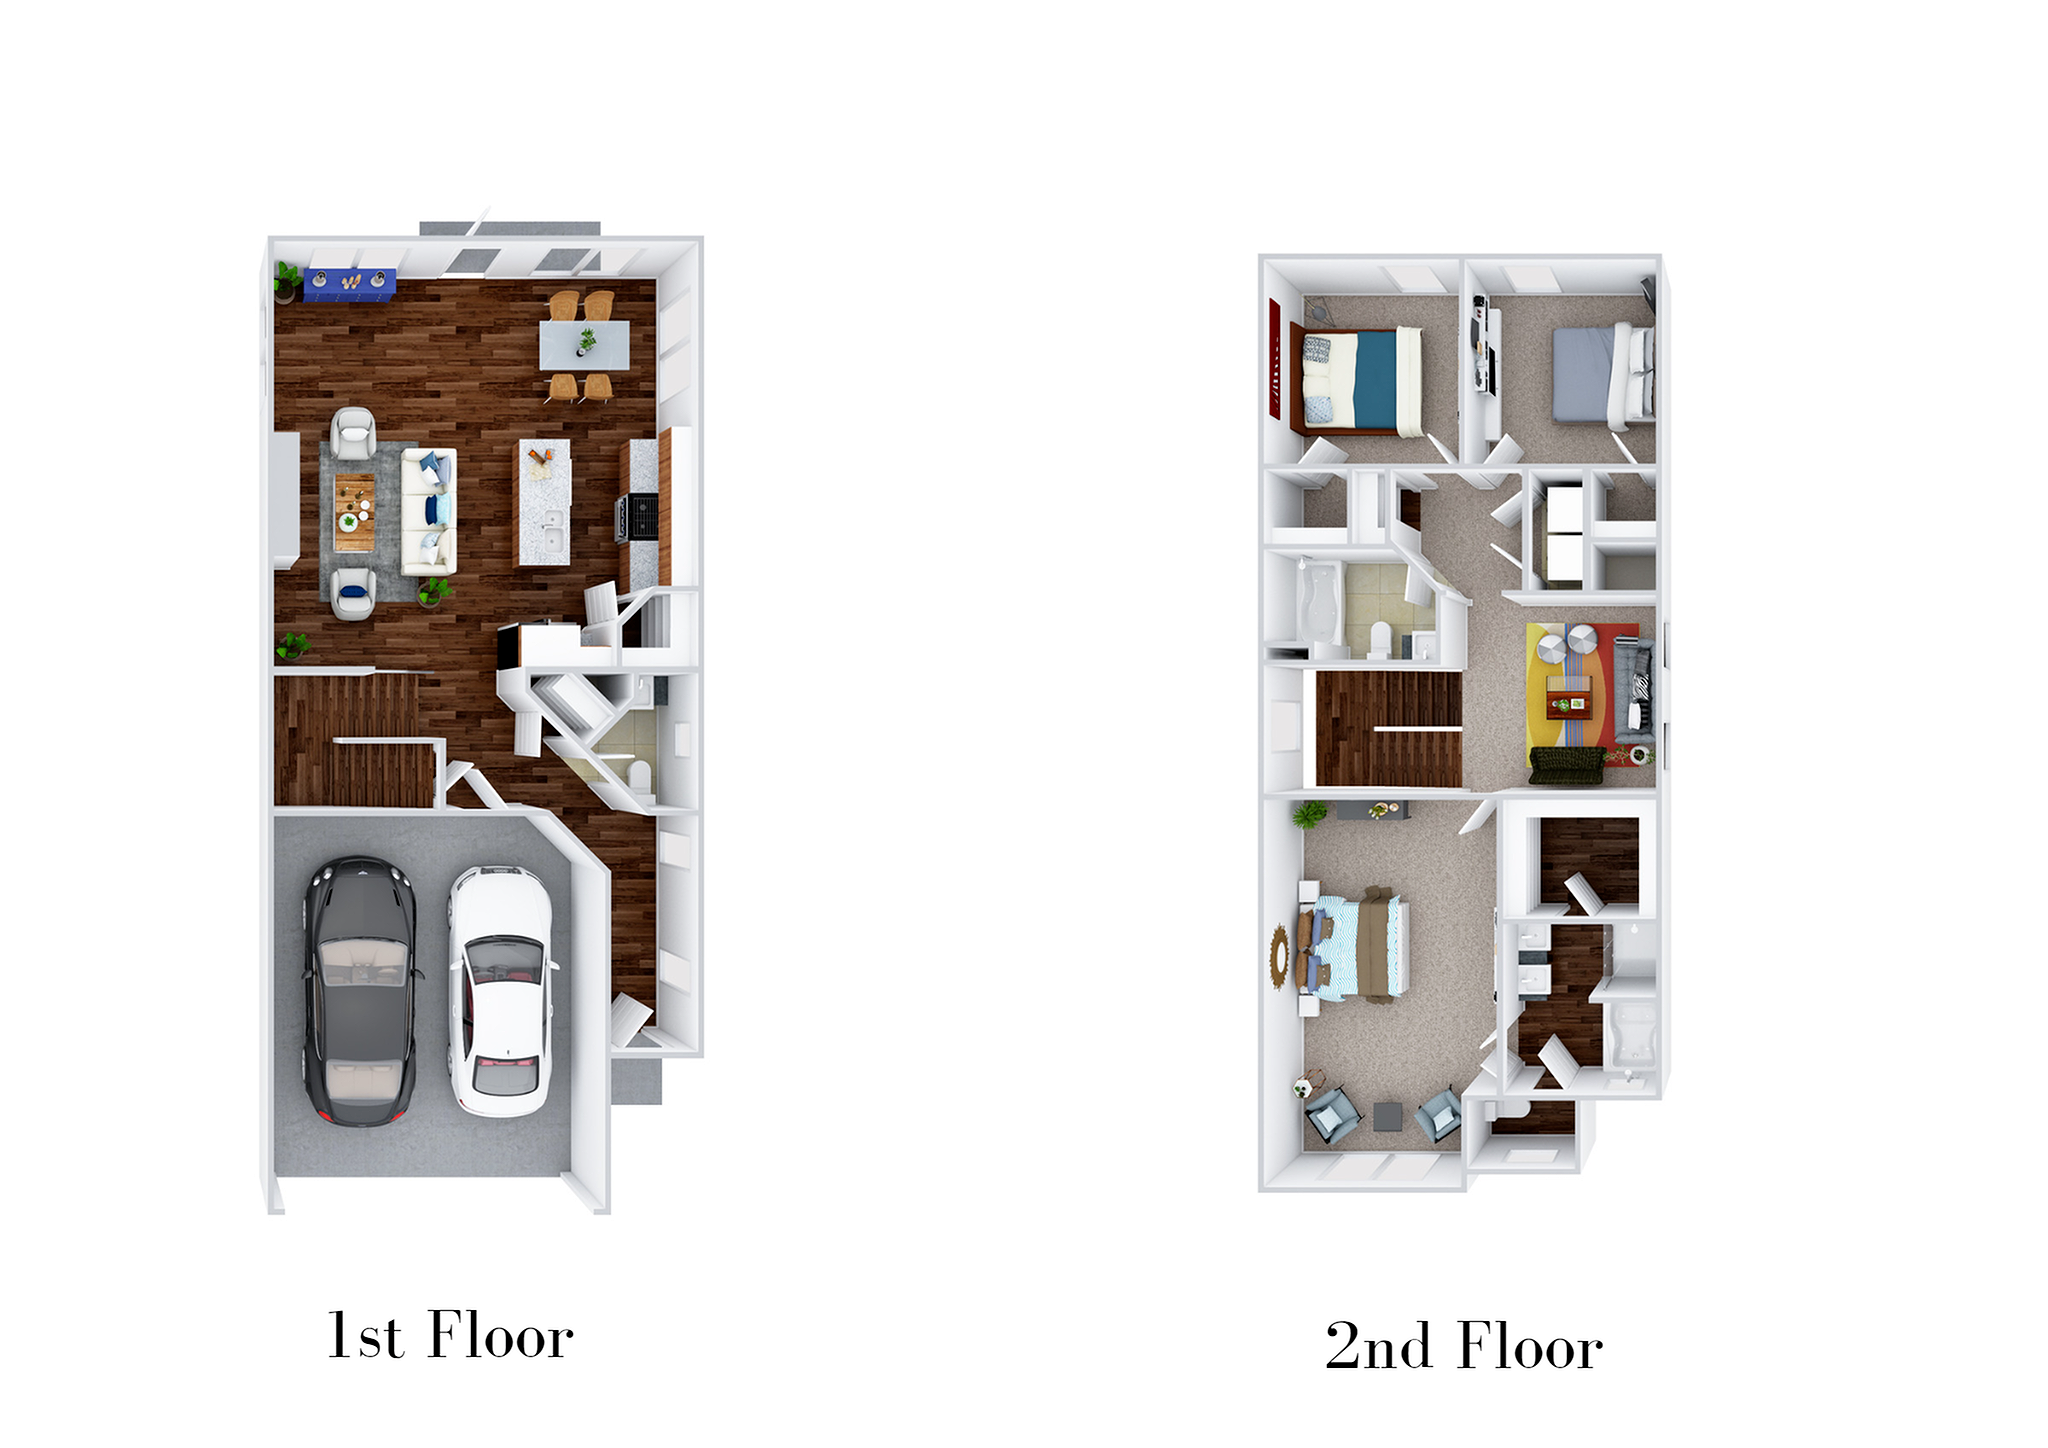 Hanover Layout - 3 bedrooms, 2.5 bathrooms.